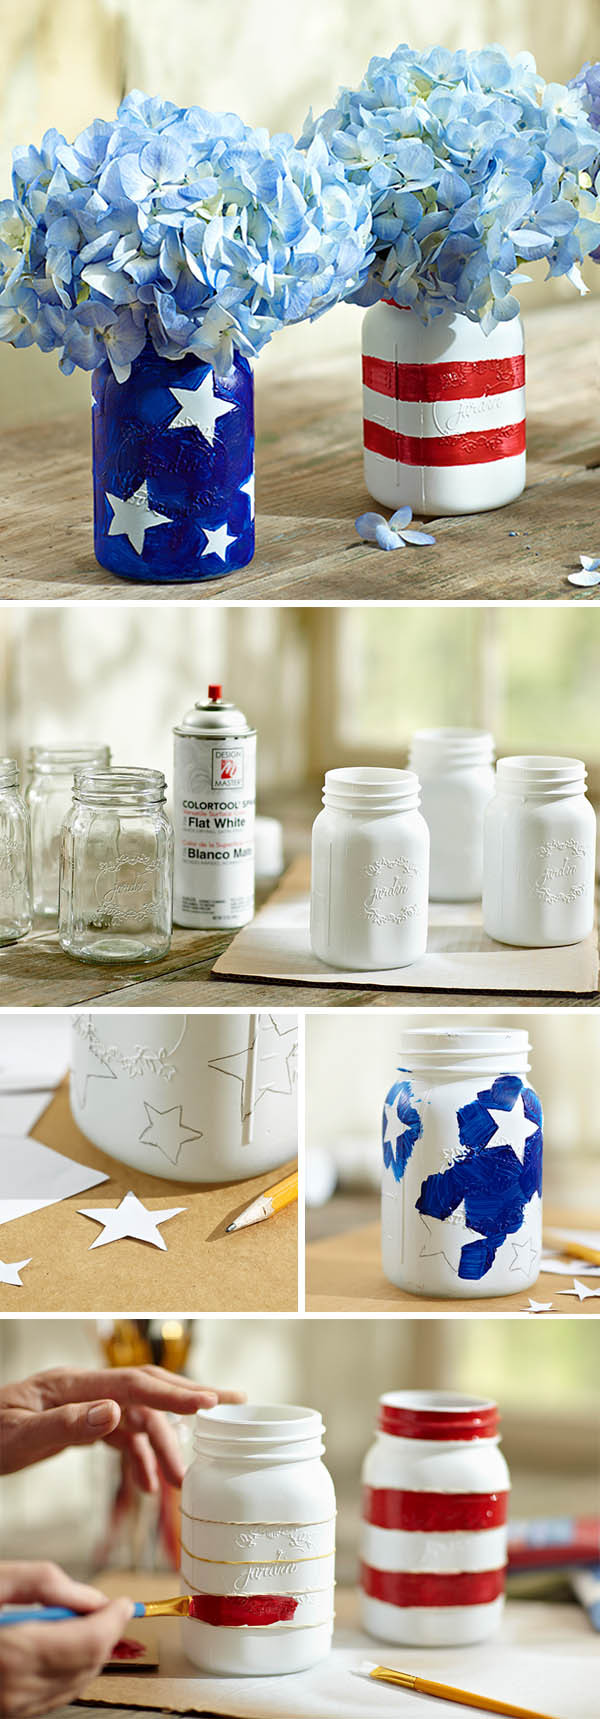 DIY Mason Jar Decor Ideas
 Ten Inspirational DIY Mason Jar Ideas for Weddings